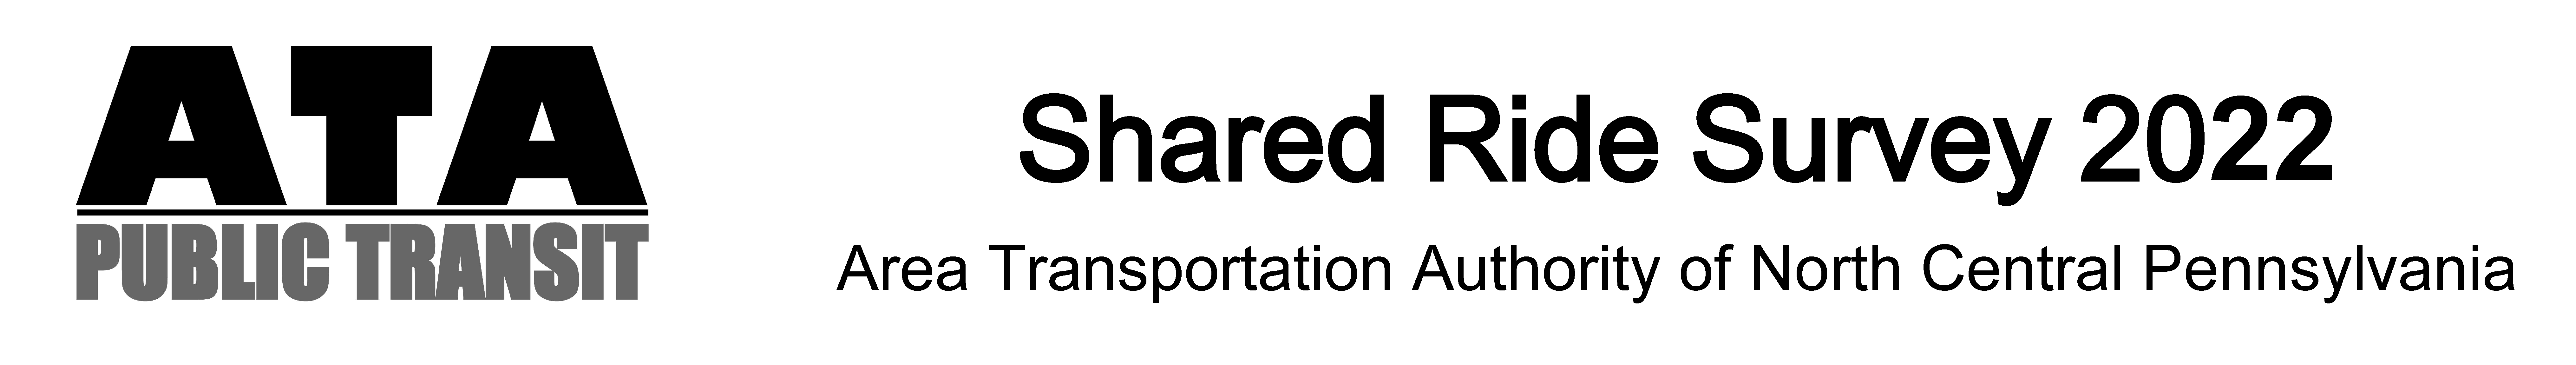 Shared Ride Survey Logo